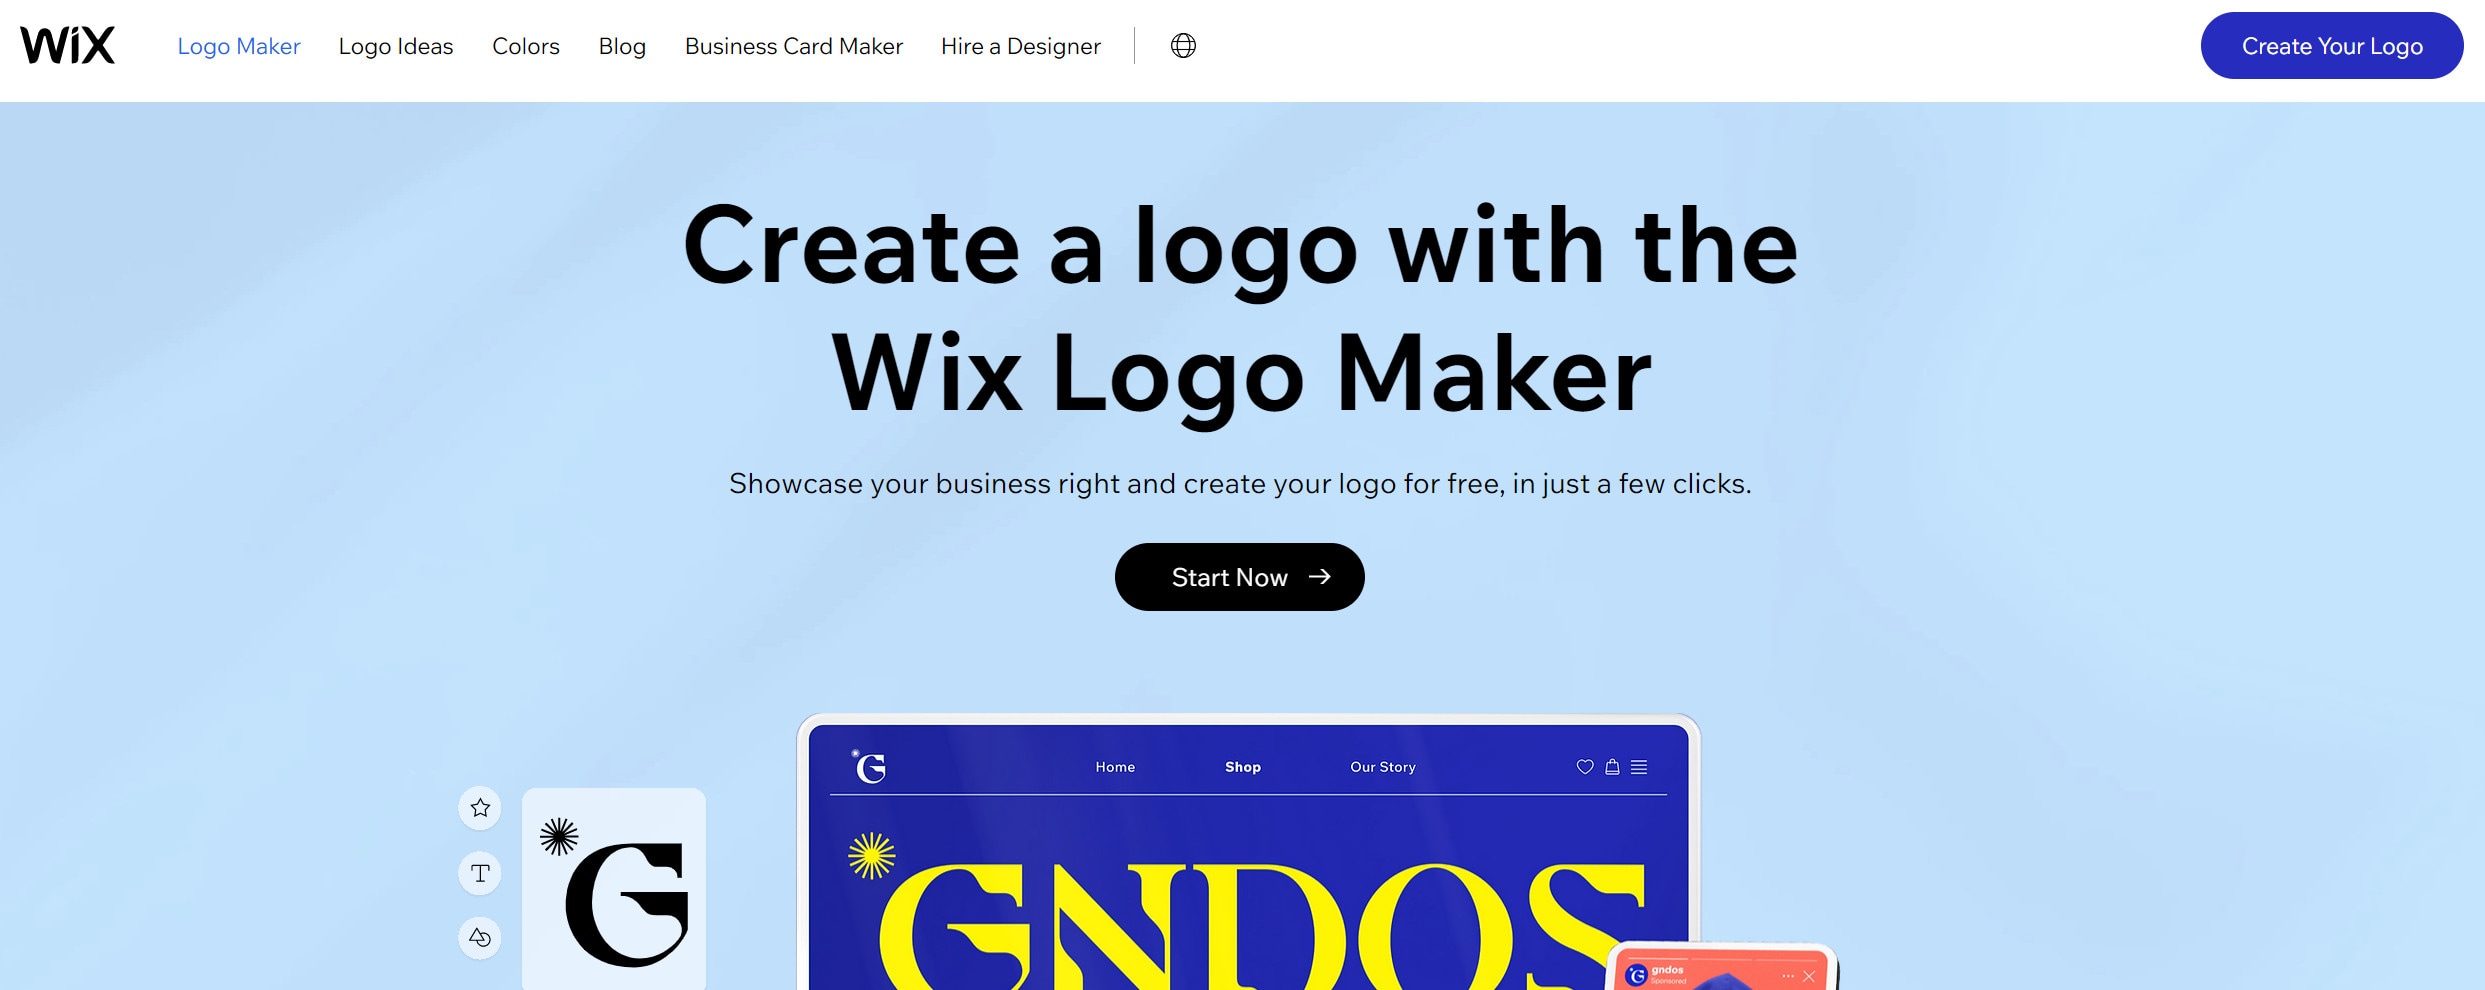 wix logo page